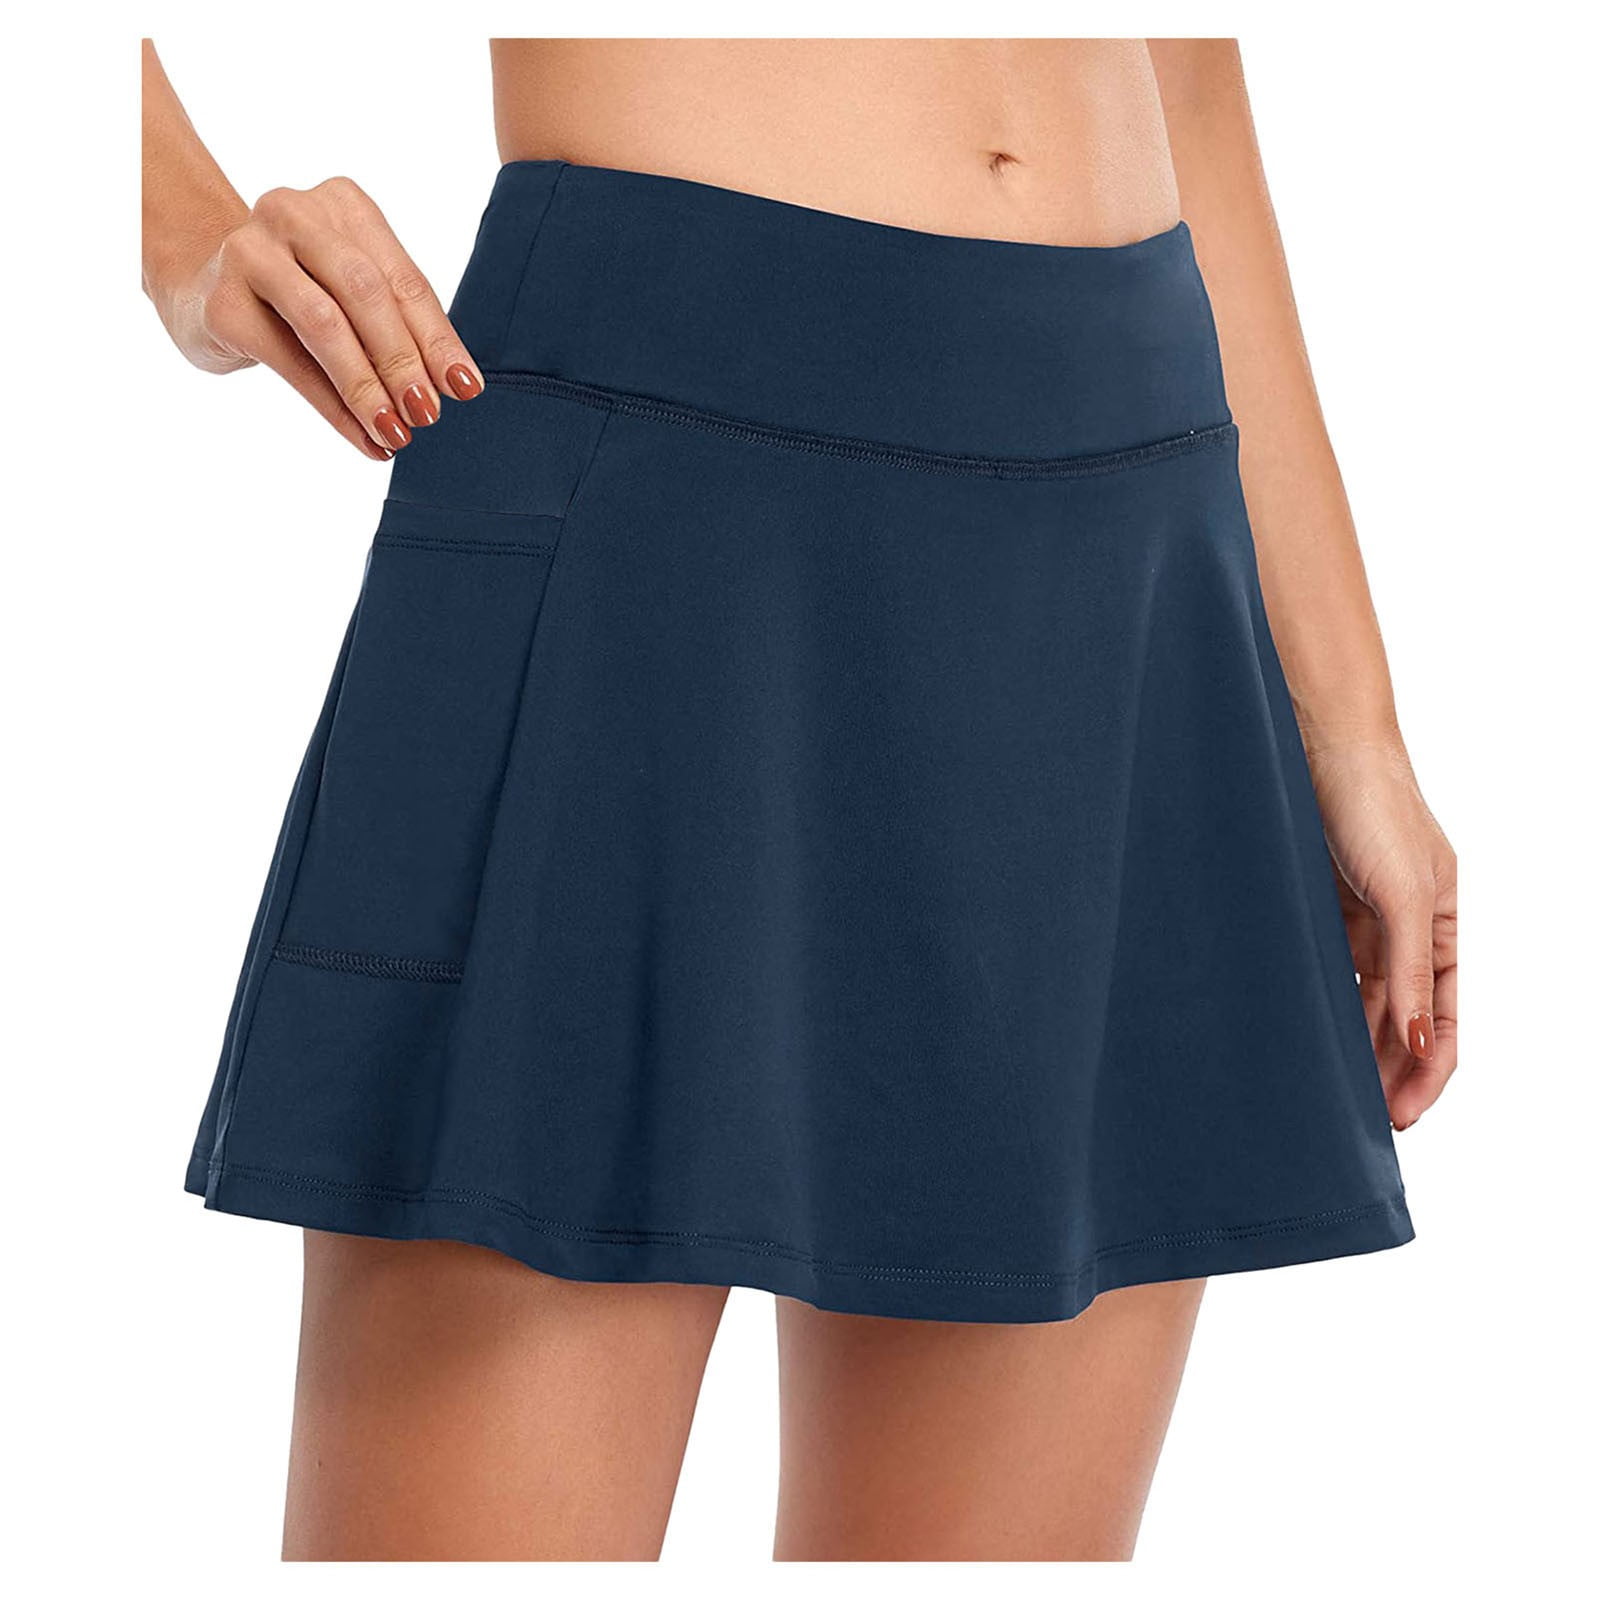 Bowake Women Tennis Skirts Inner Shorts Elastic Sports Golf Skorts With ...